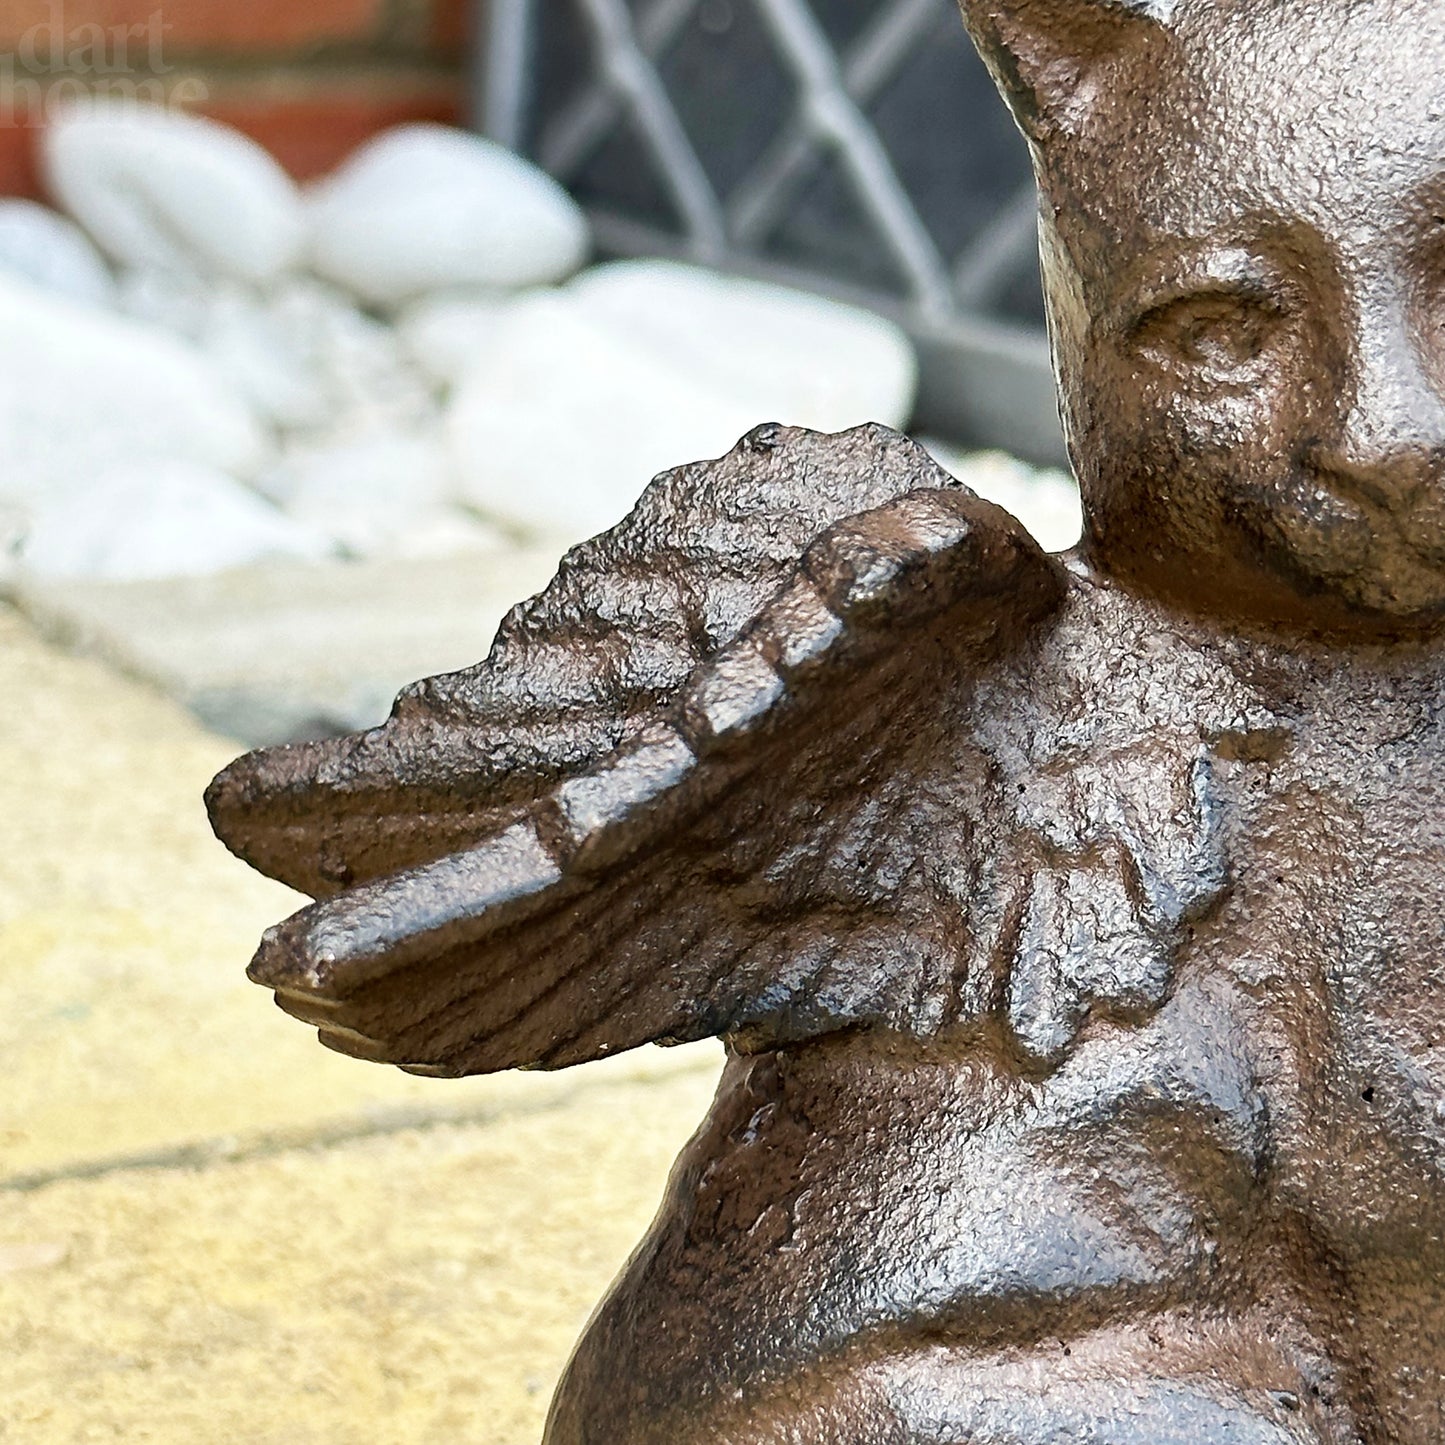 Cast Iron Cat Angel Figurine